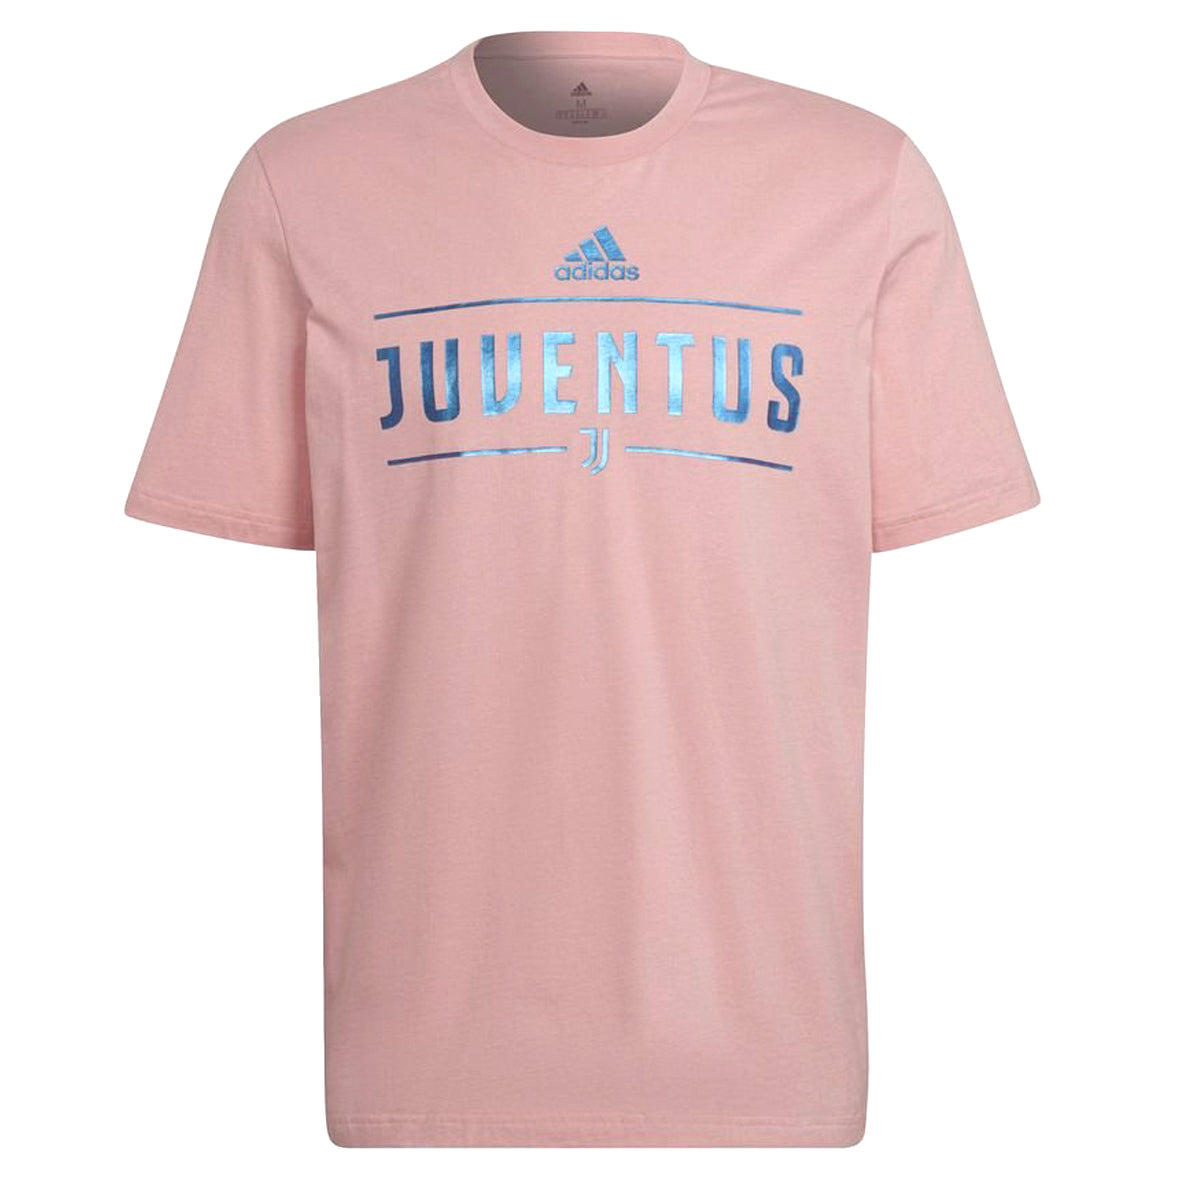 adidas Men's Juventus Graphic Tee | HG1245 Shirt Adidas Adult Small Glory Pink 